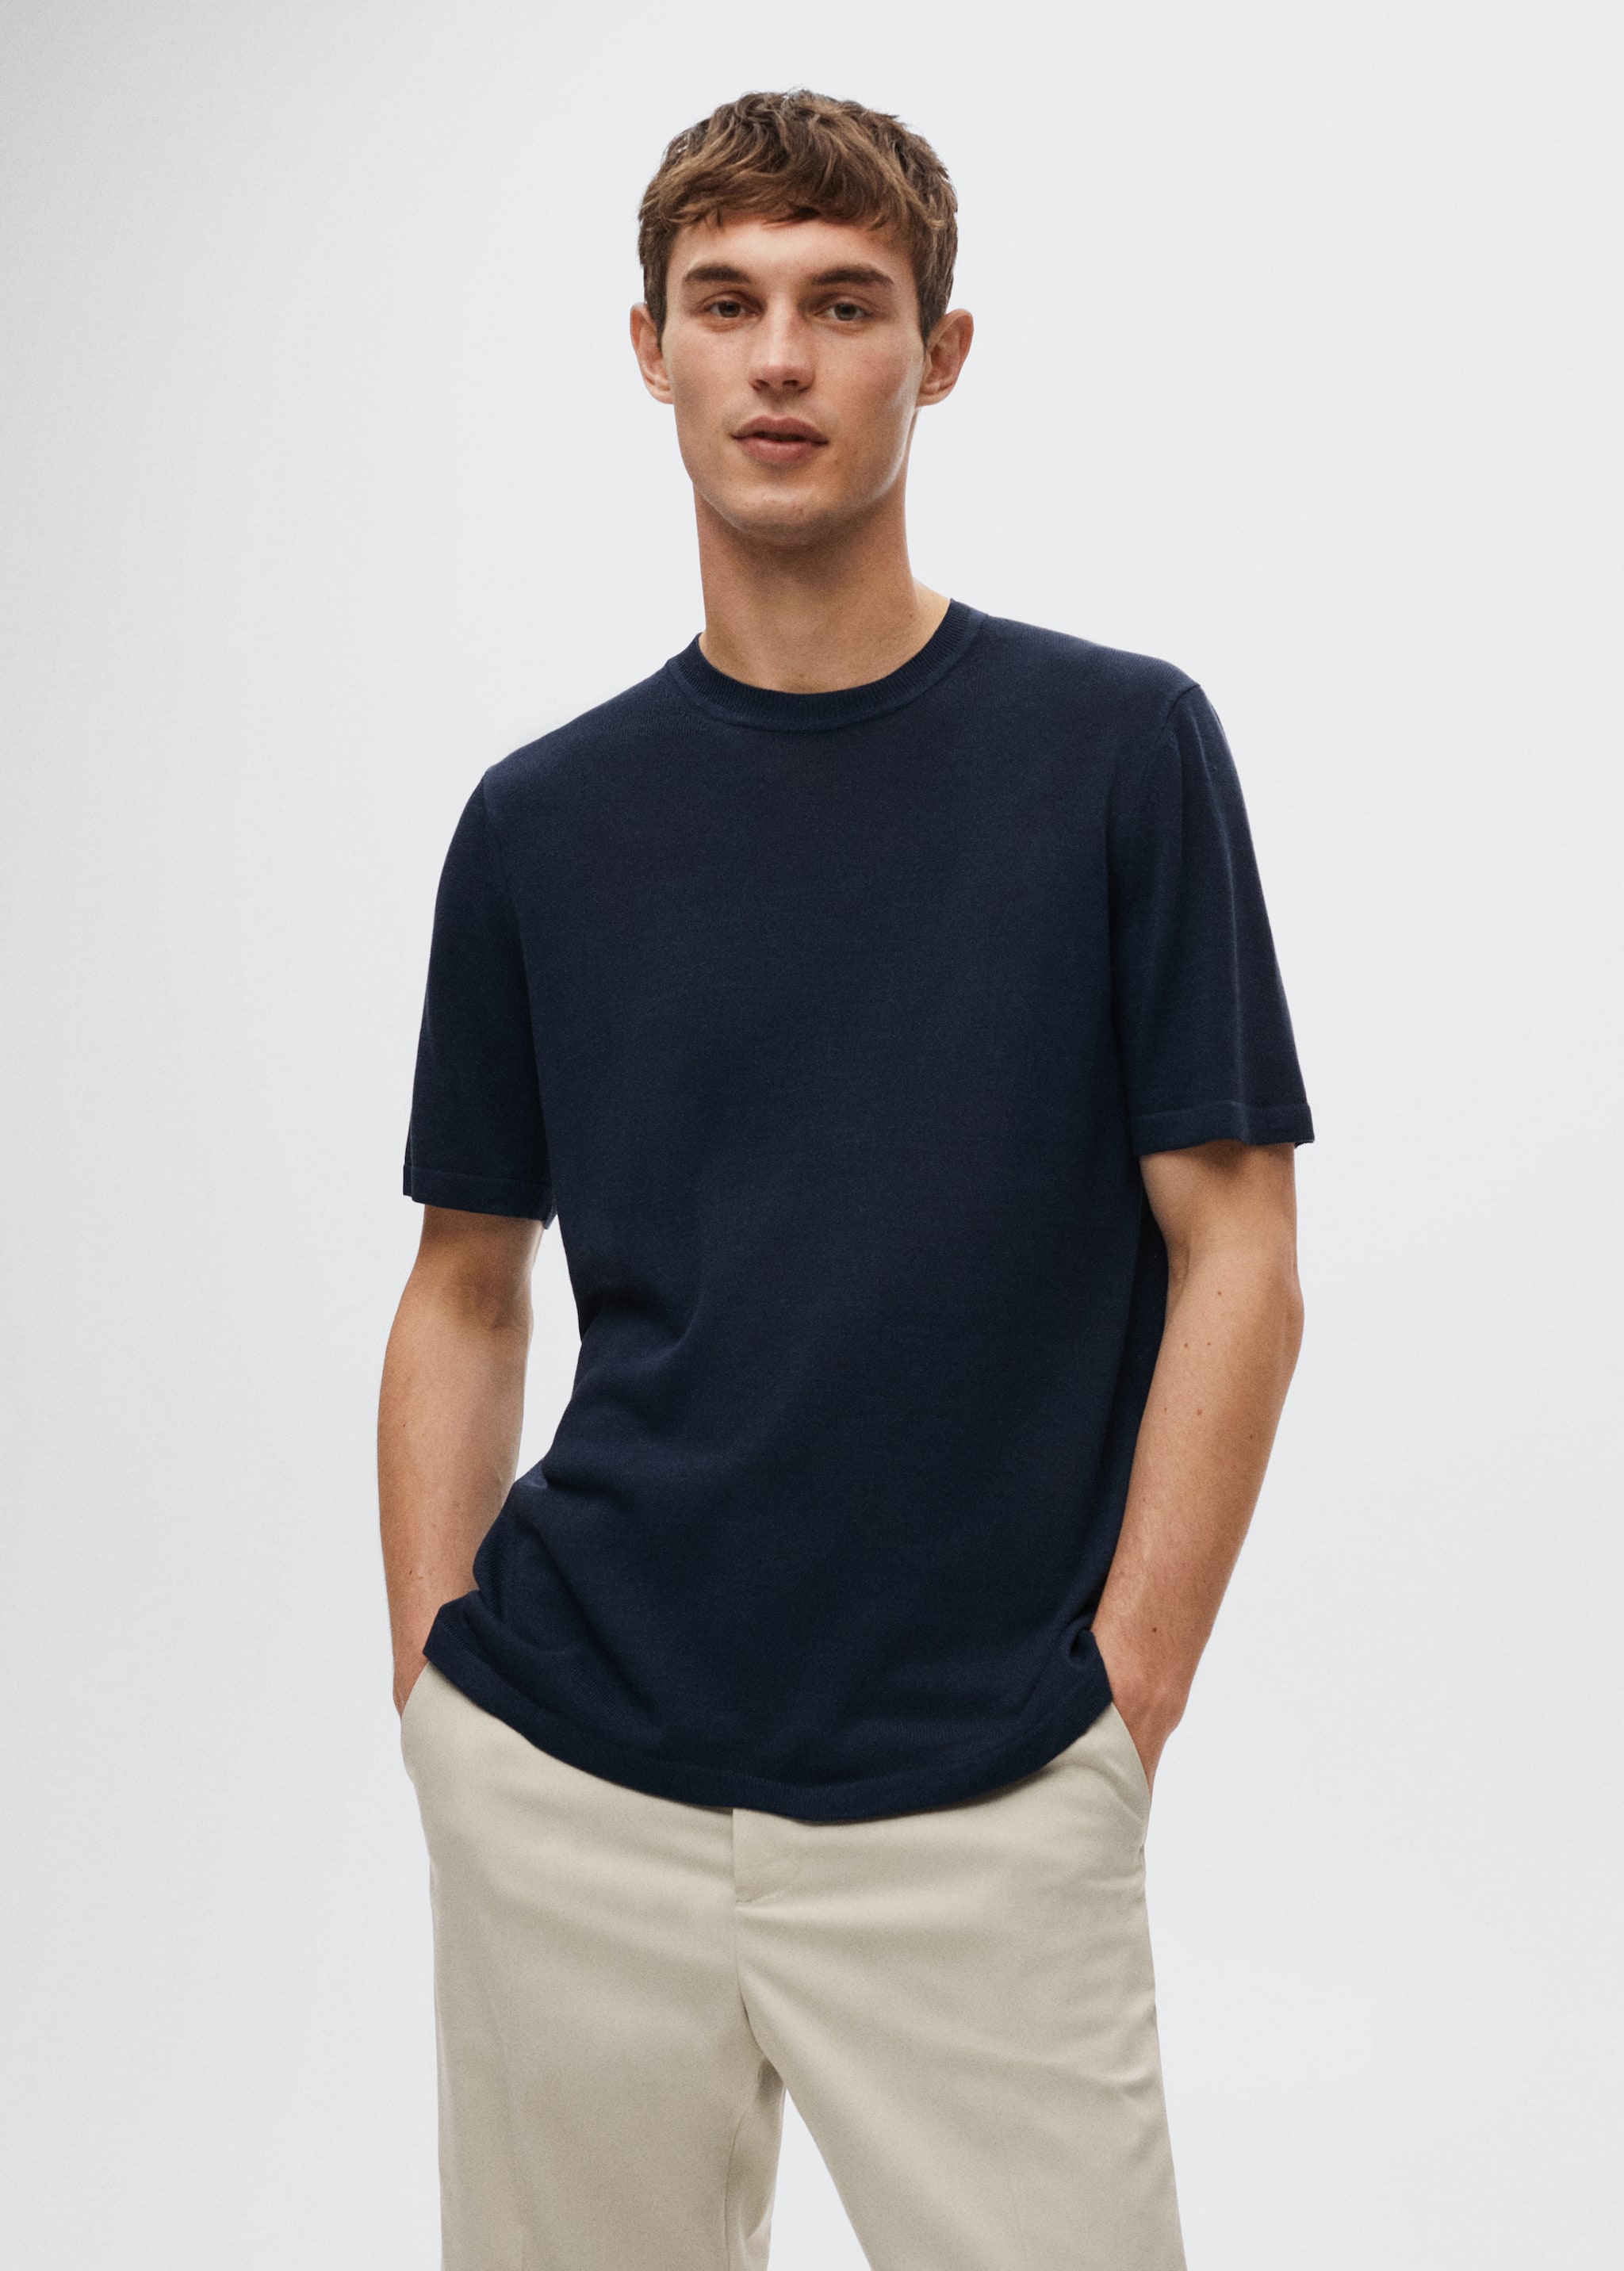 Camiseta punto lino - Plano medio